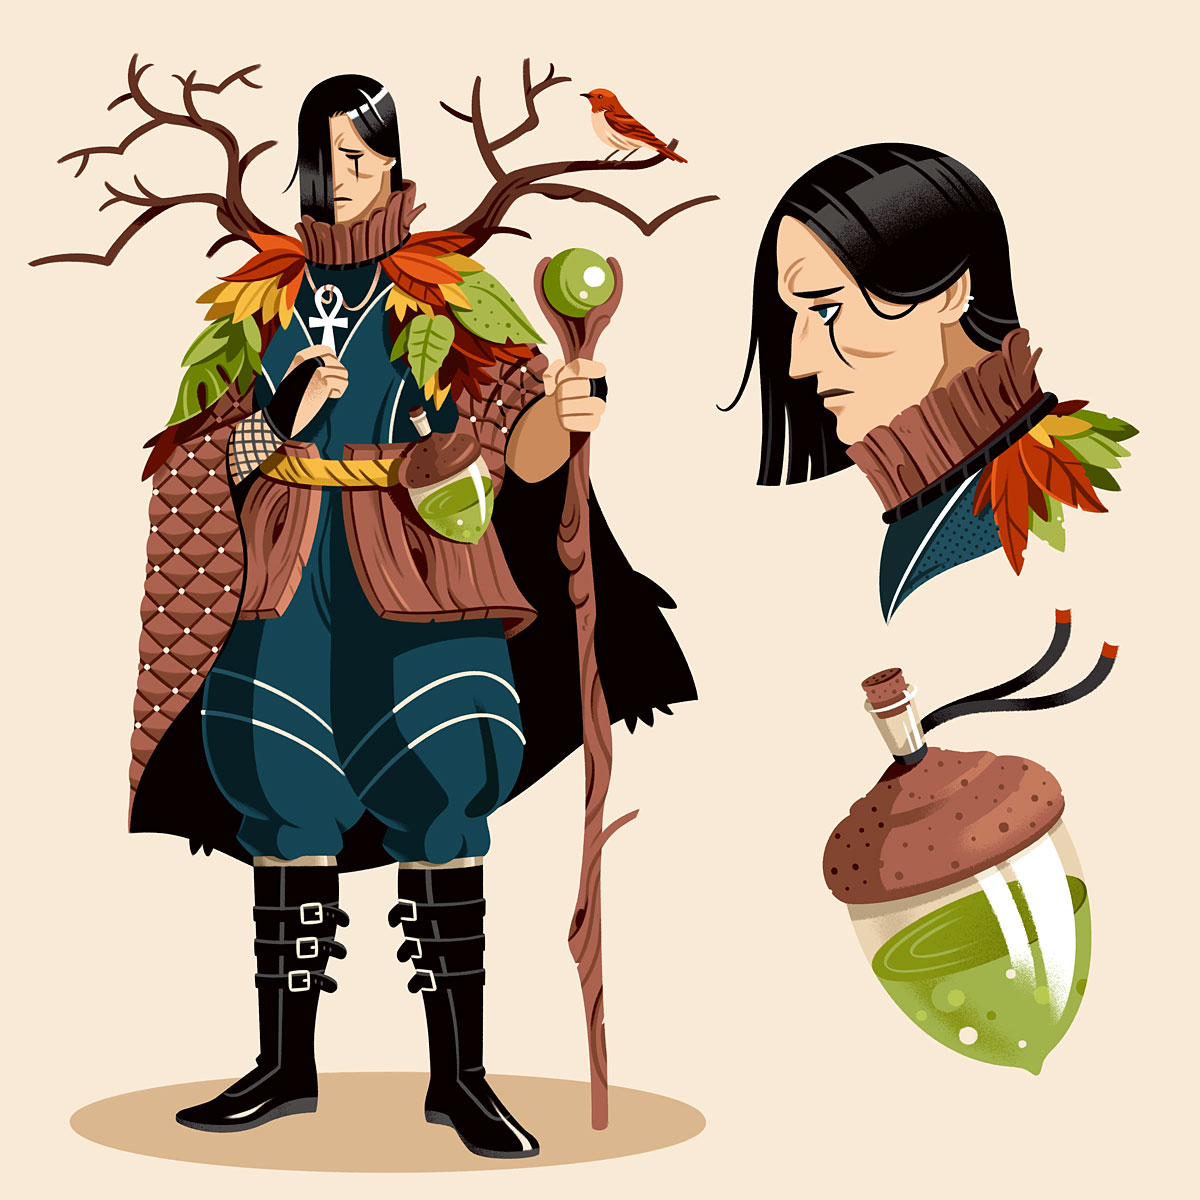 Raúl Gil – Gothbert Greenleaf (Character design)